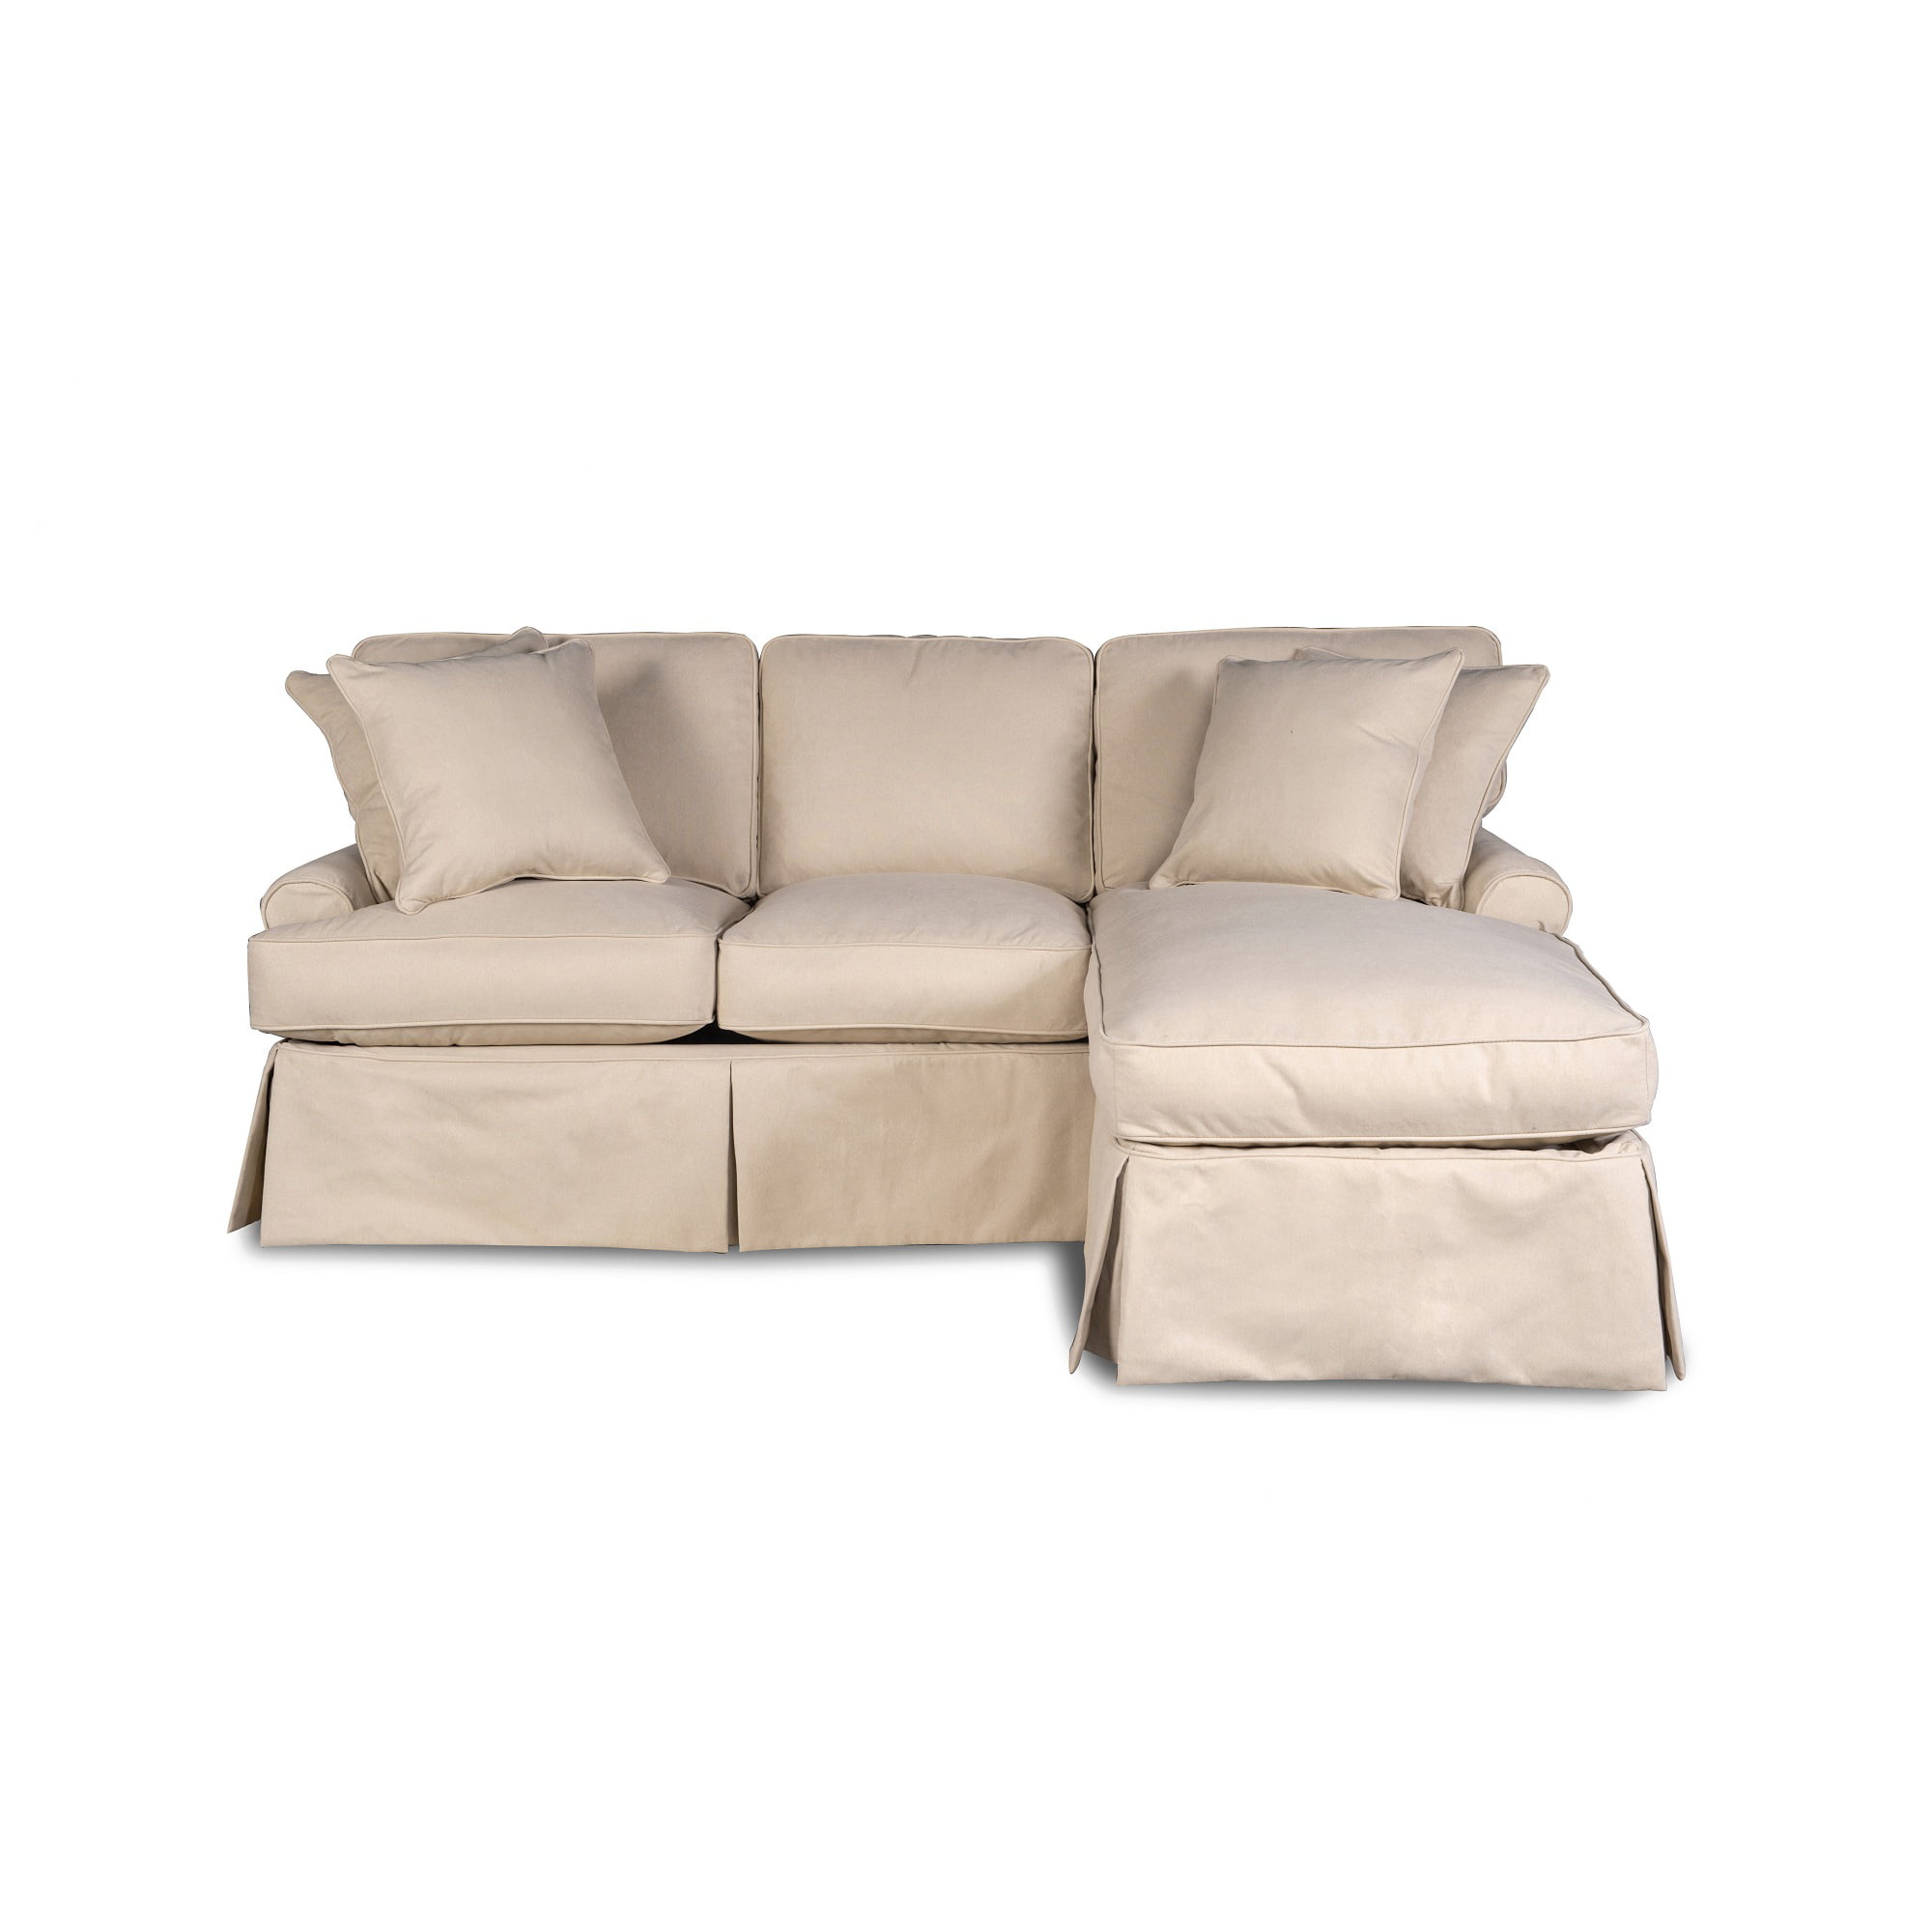 Tan Brown Fabric Slipcovered Sleeper, Brown Fabric Sleeper Sofa